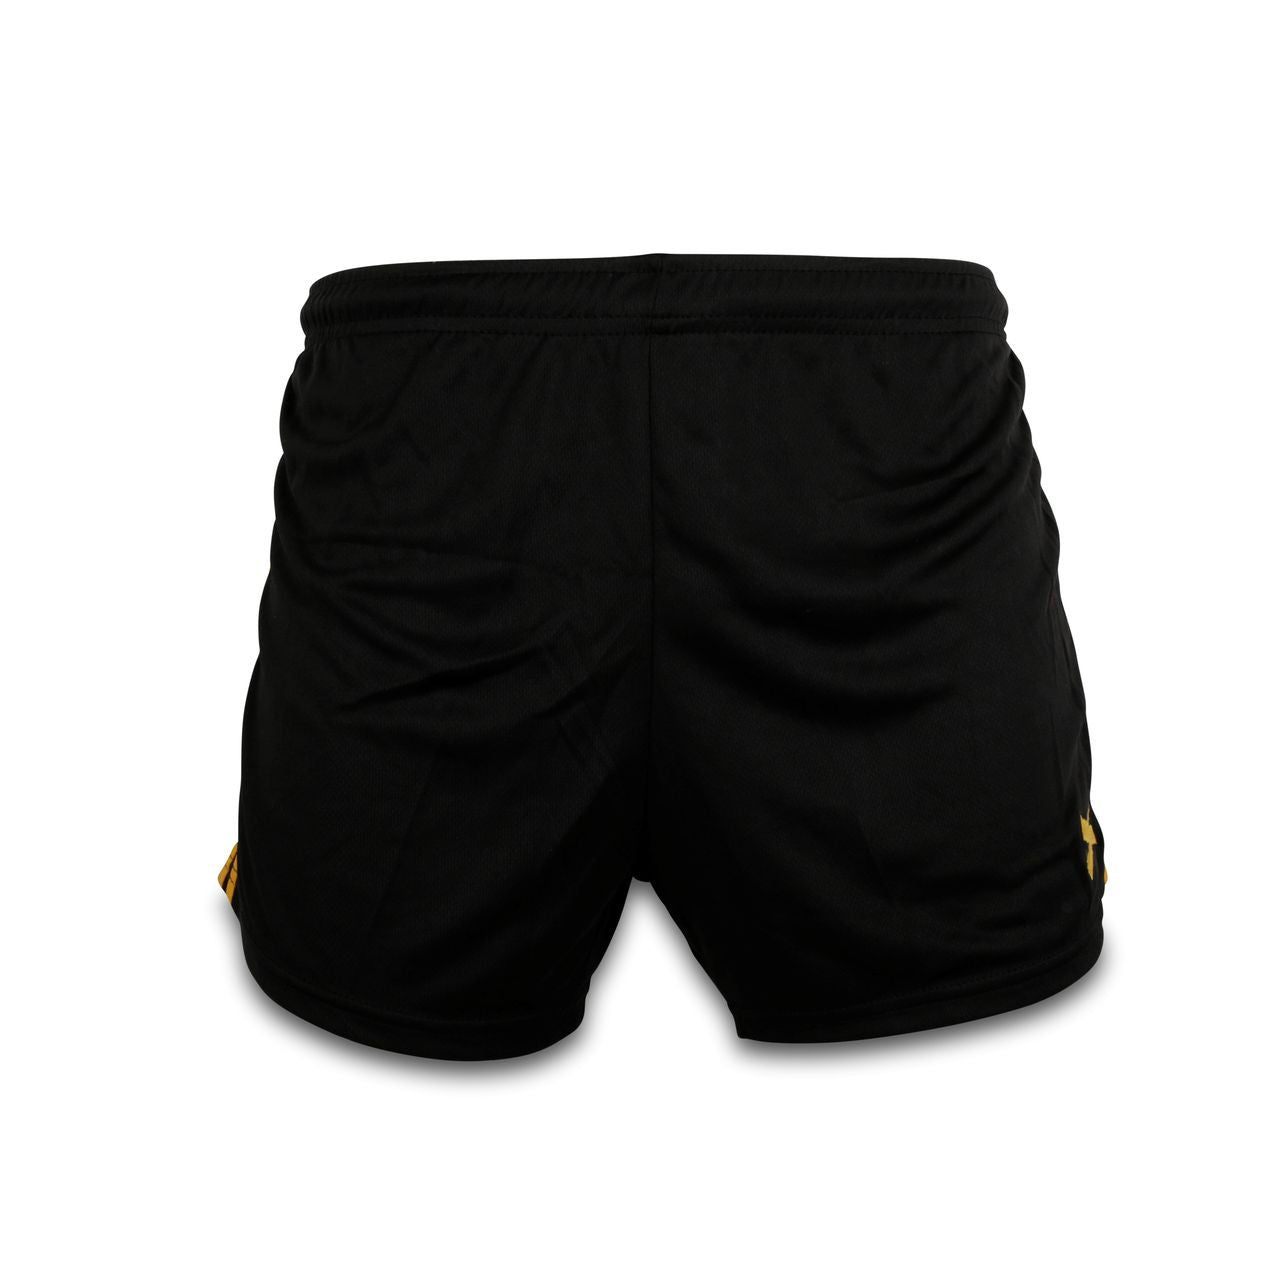 GAA Shorts Black with Amber Stripes Gaelic Games Sportswear